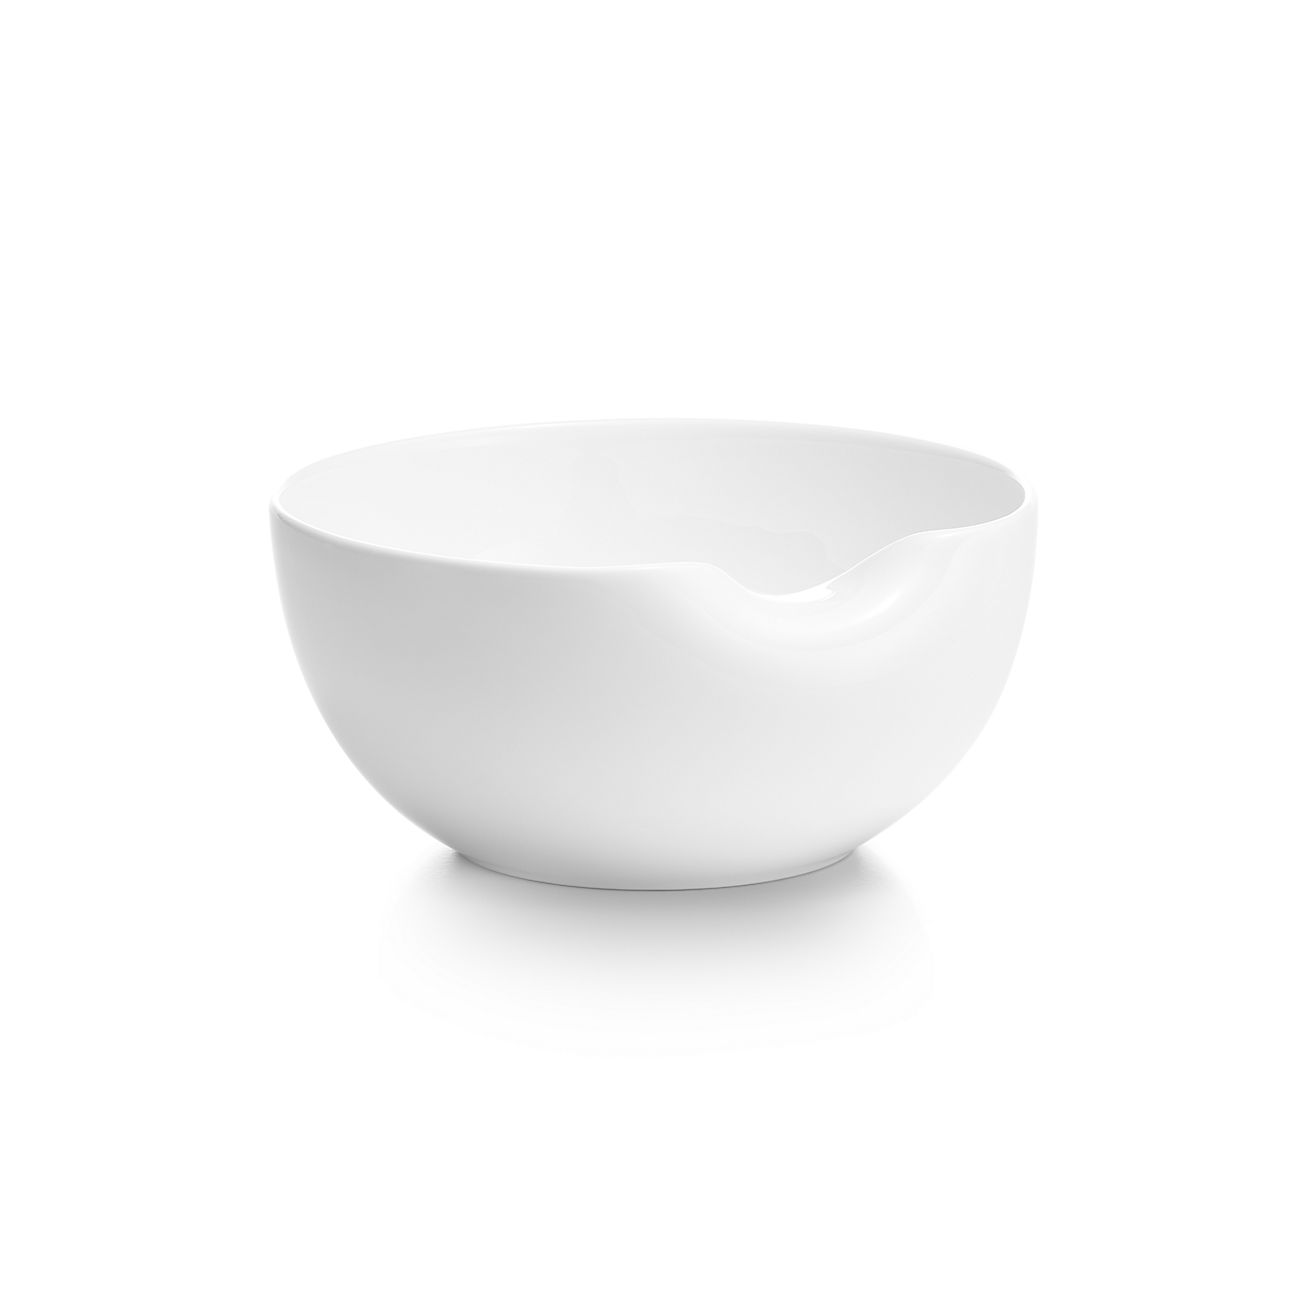 Elsa Peretti® Thumbprint bowl in bone china. More sizes available. | Tiffany & Co.